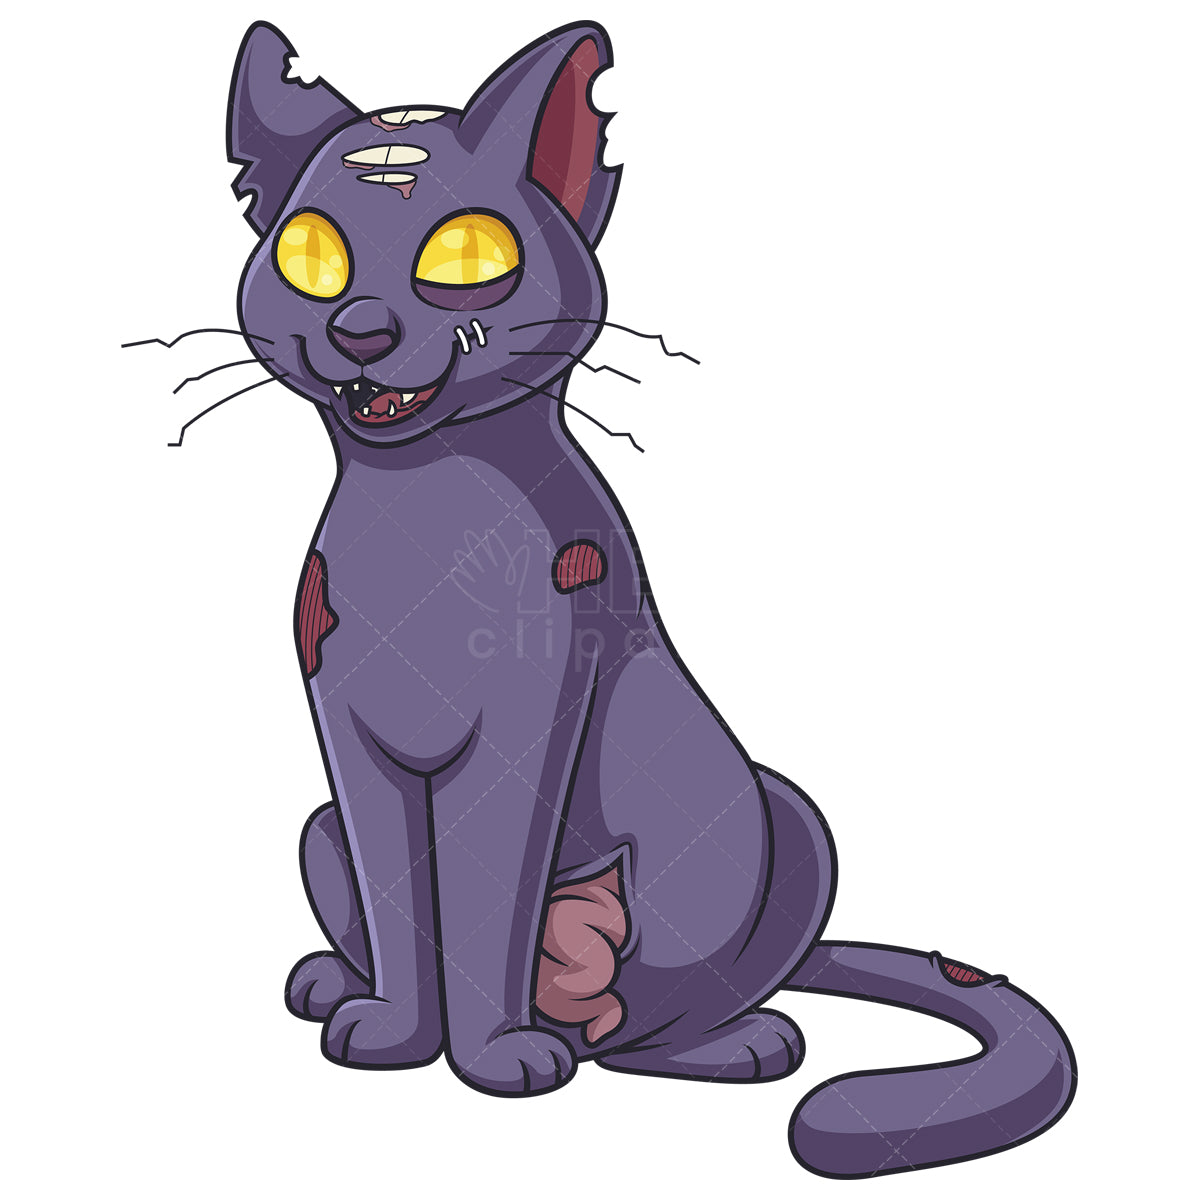 Royalty-free stock vector illustration of a creepy zombie cat.